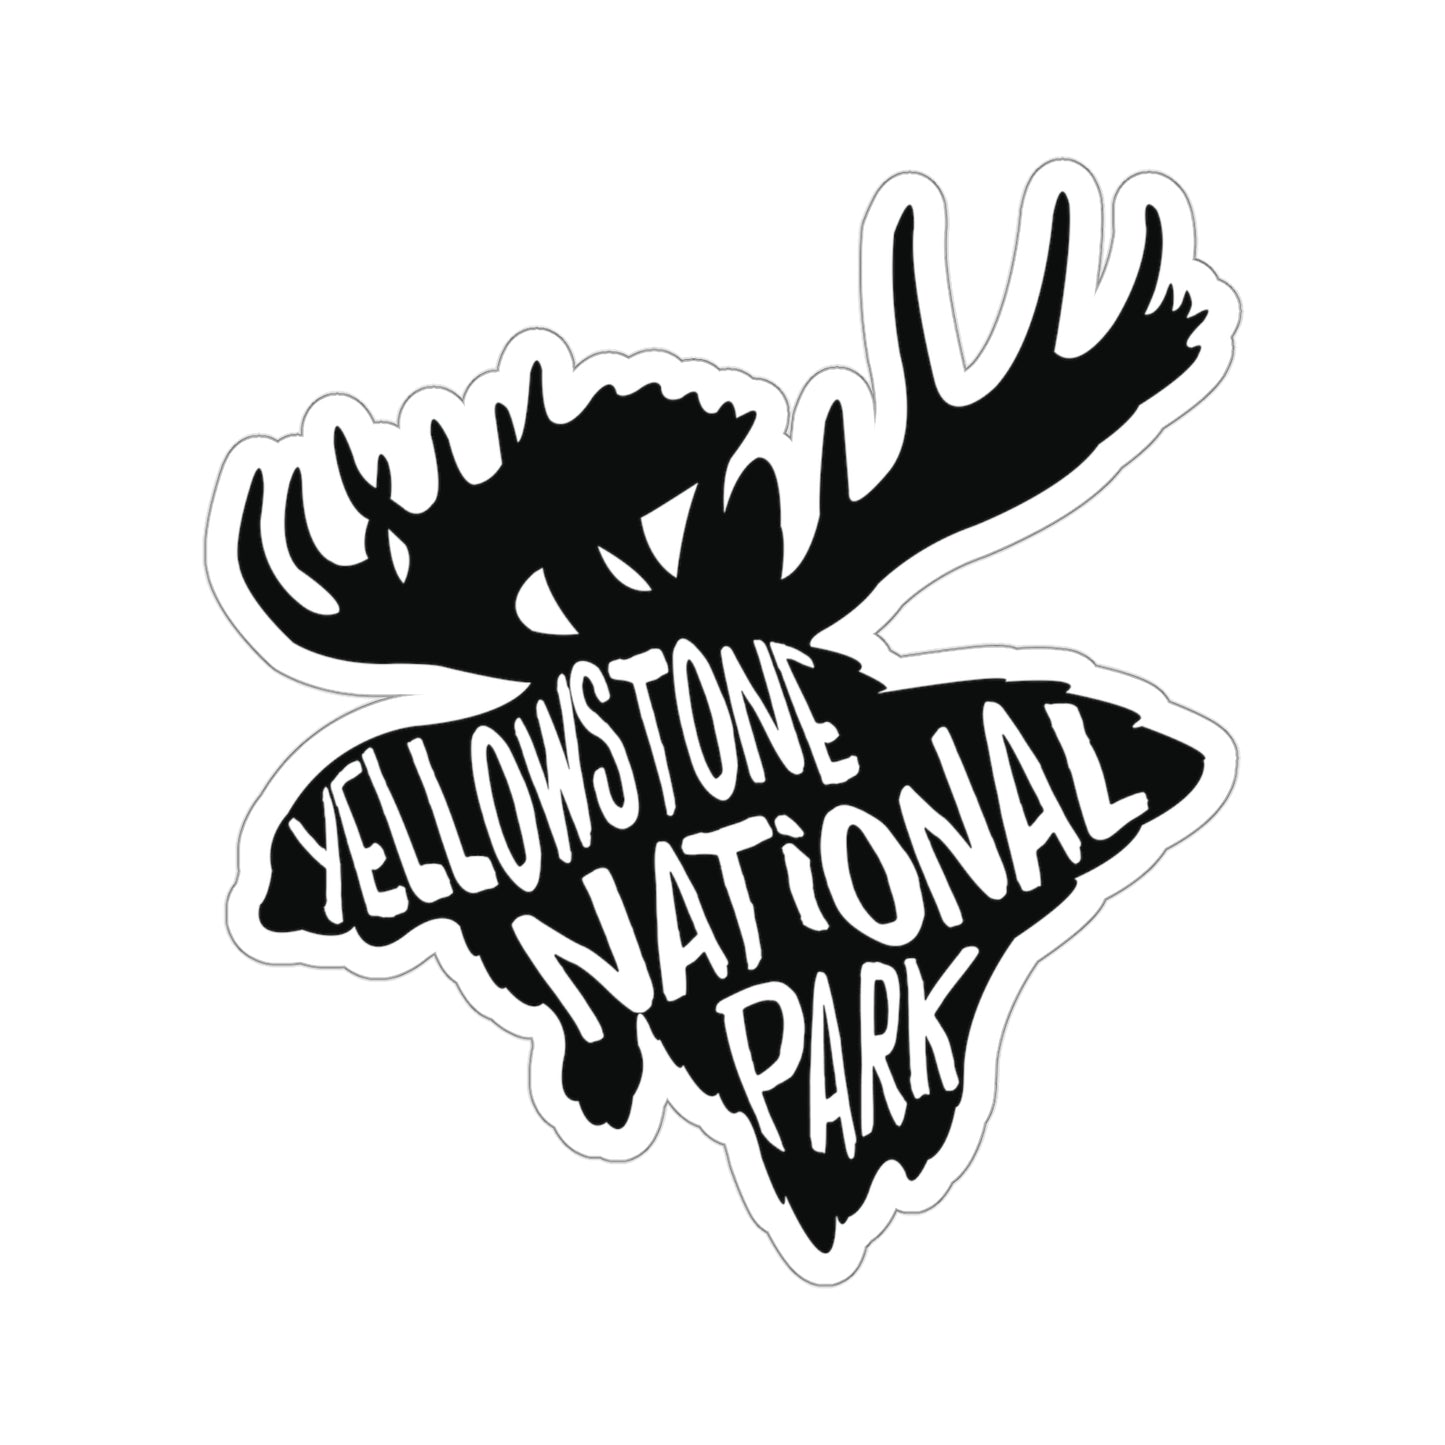 Yellowstone National Park Sticker - Moose